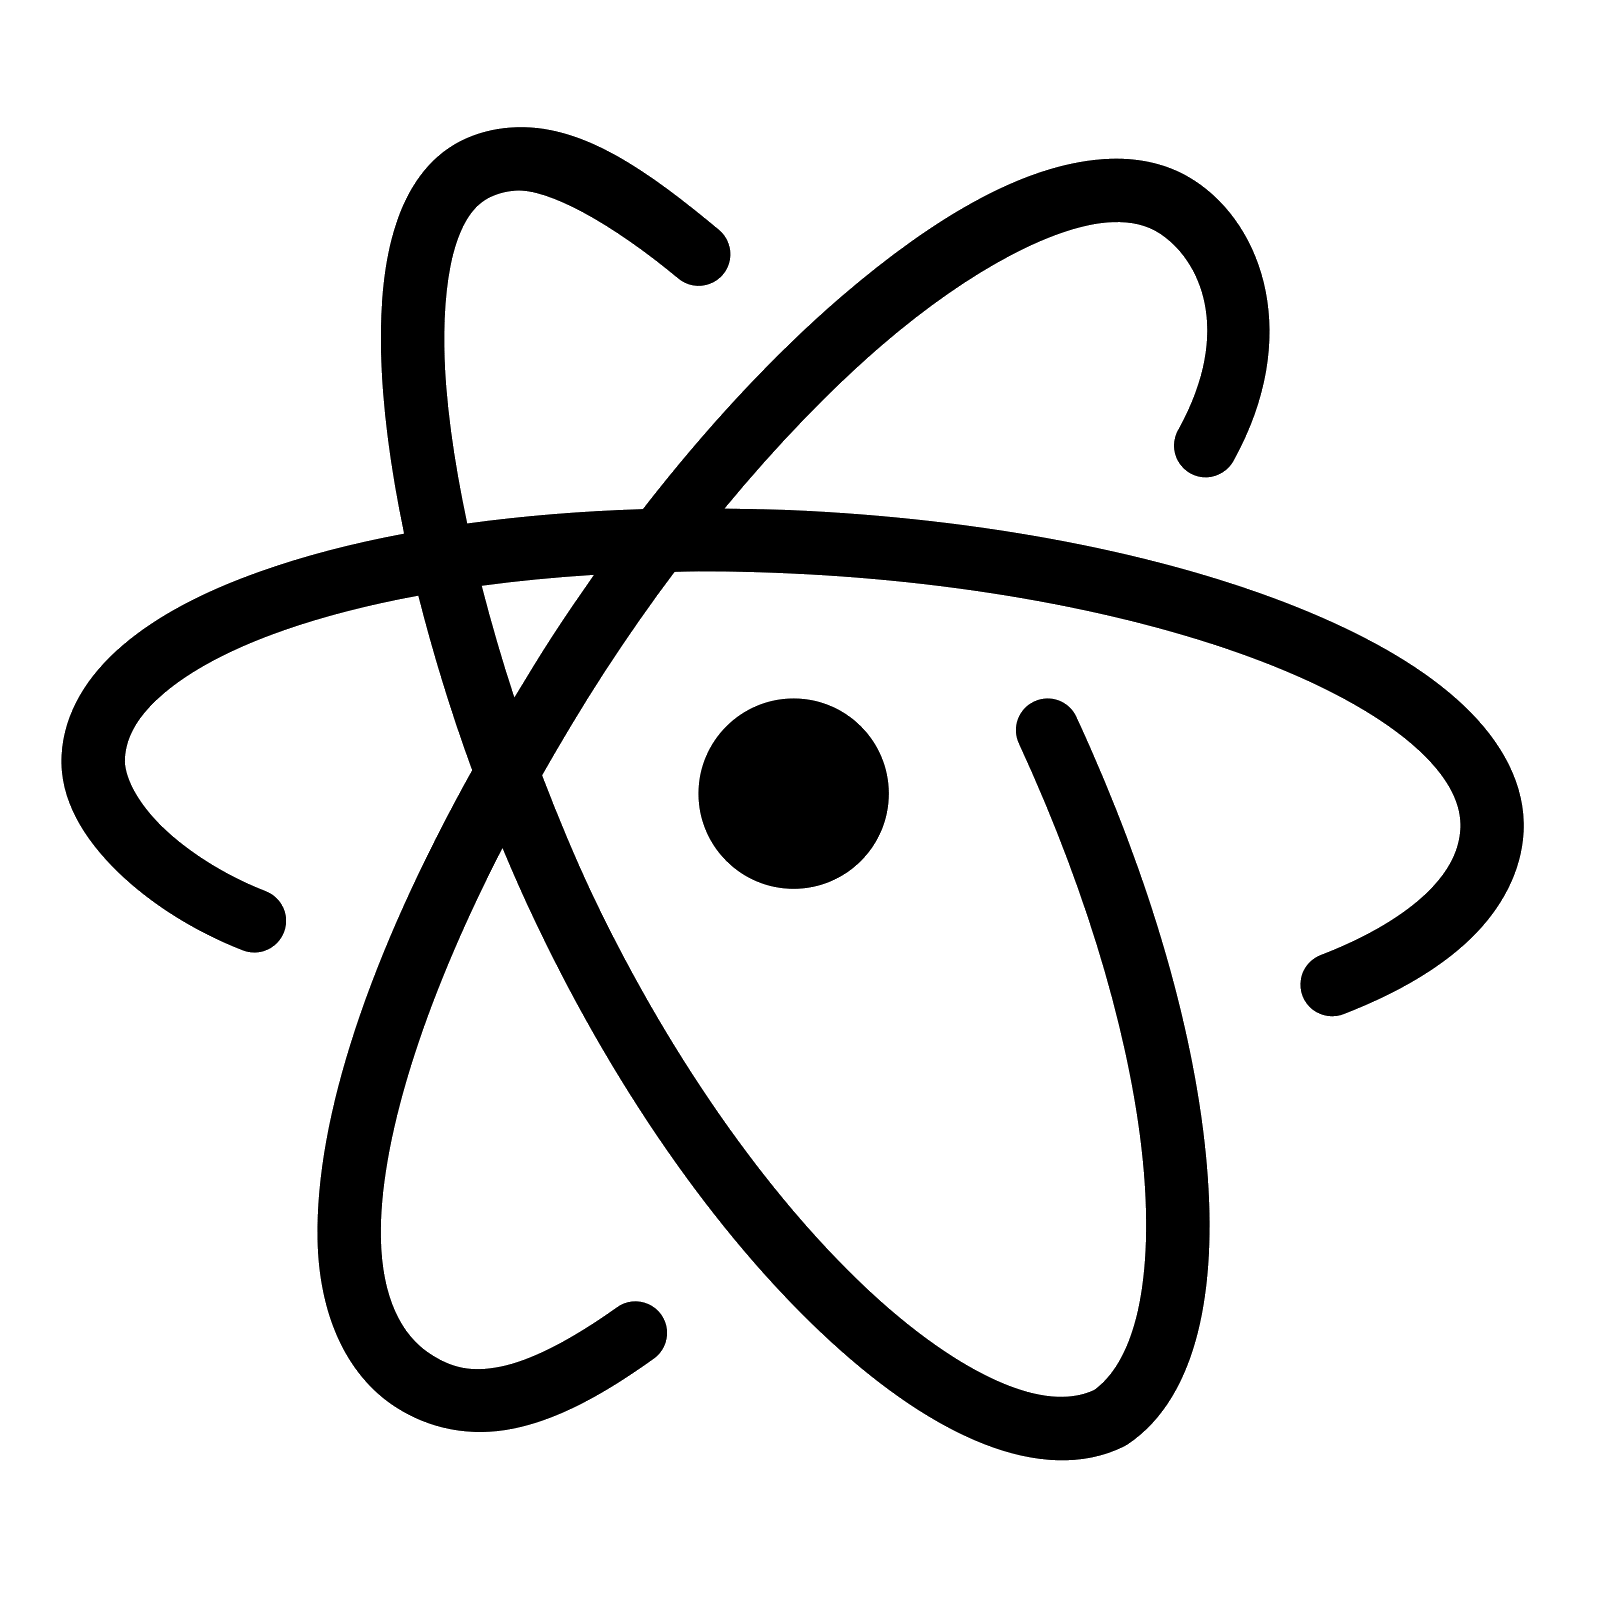 Gray atom icon. vector illustration. Atom icon in flat vectors 